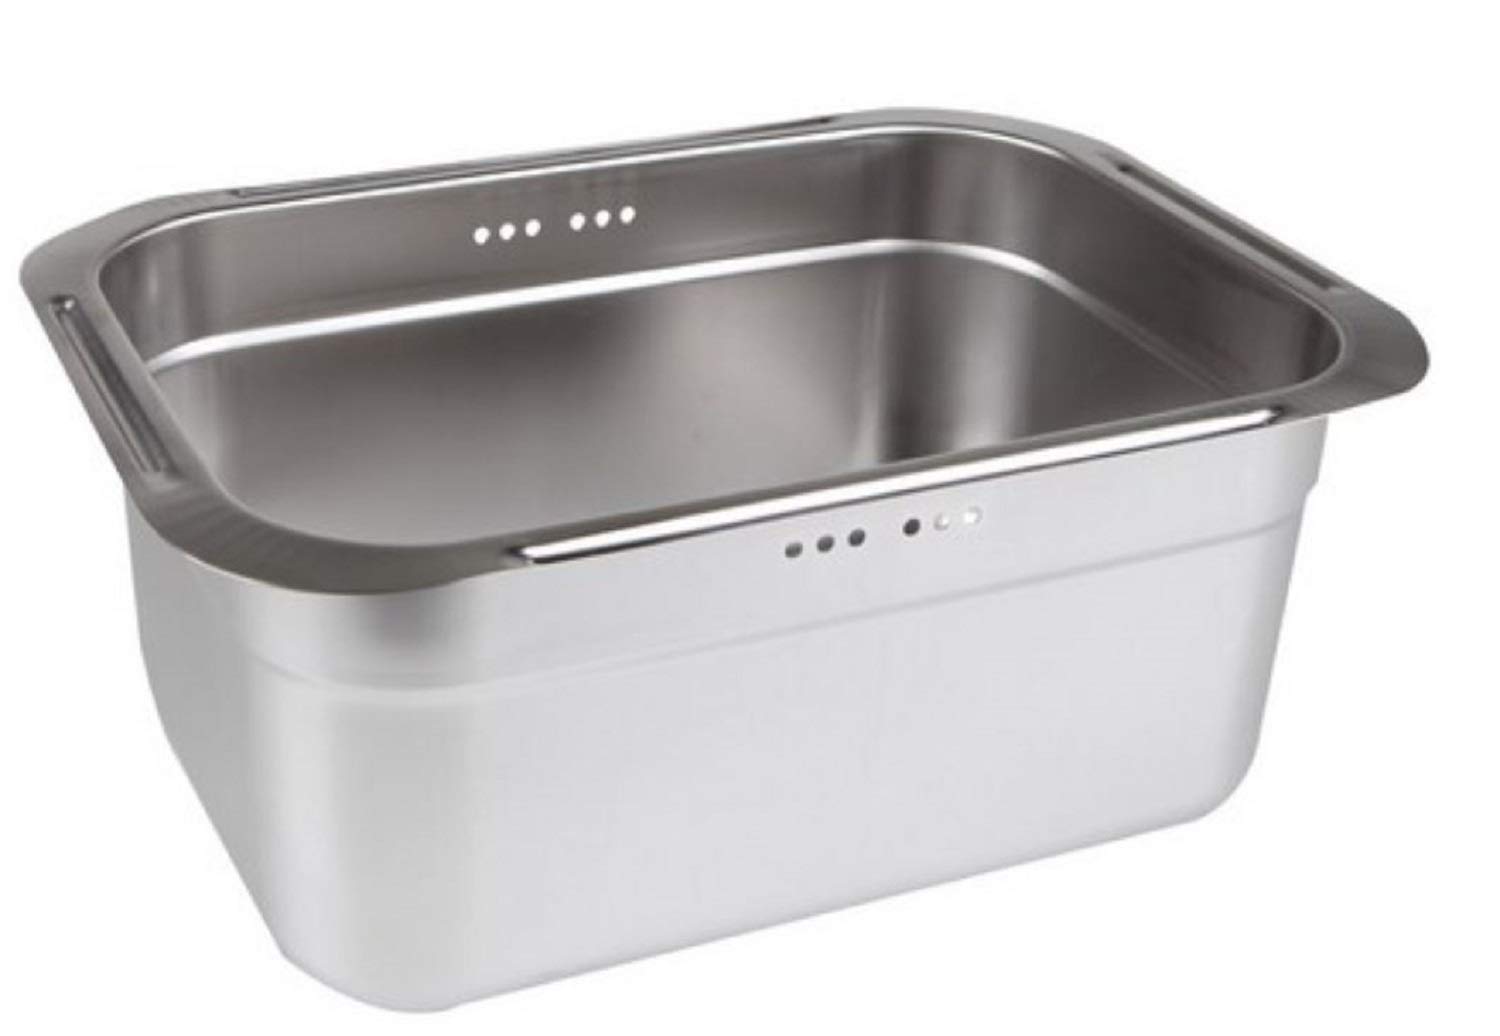 Incoc Stainless Steel Basin Bucket Dishpan Dish Washing Bowl Basket Portable Tub Rack (Large)